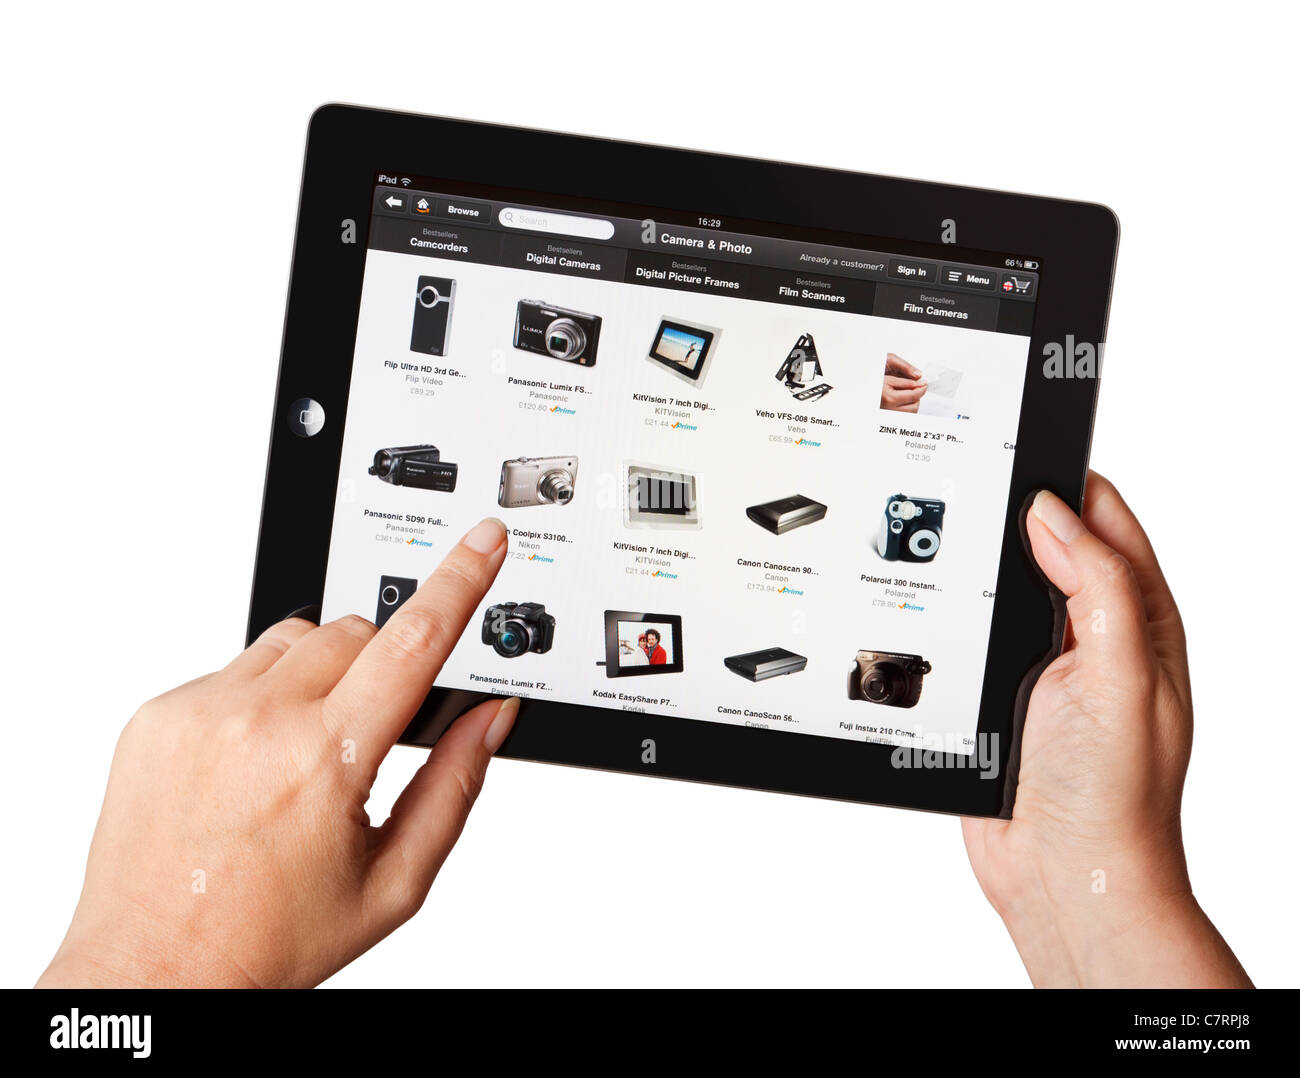 Hands holding iPad using the Amazon online shopping app Stock Photo - Alamy